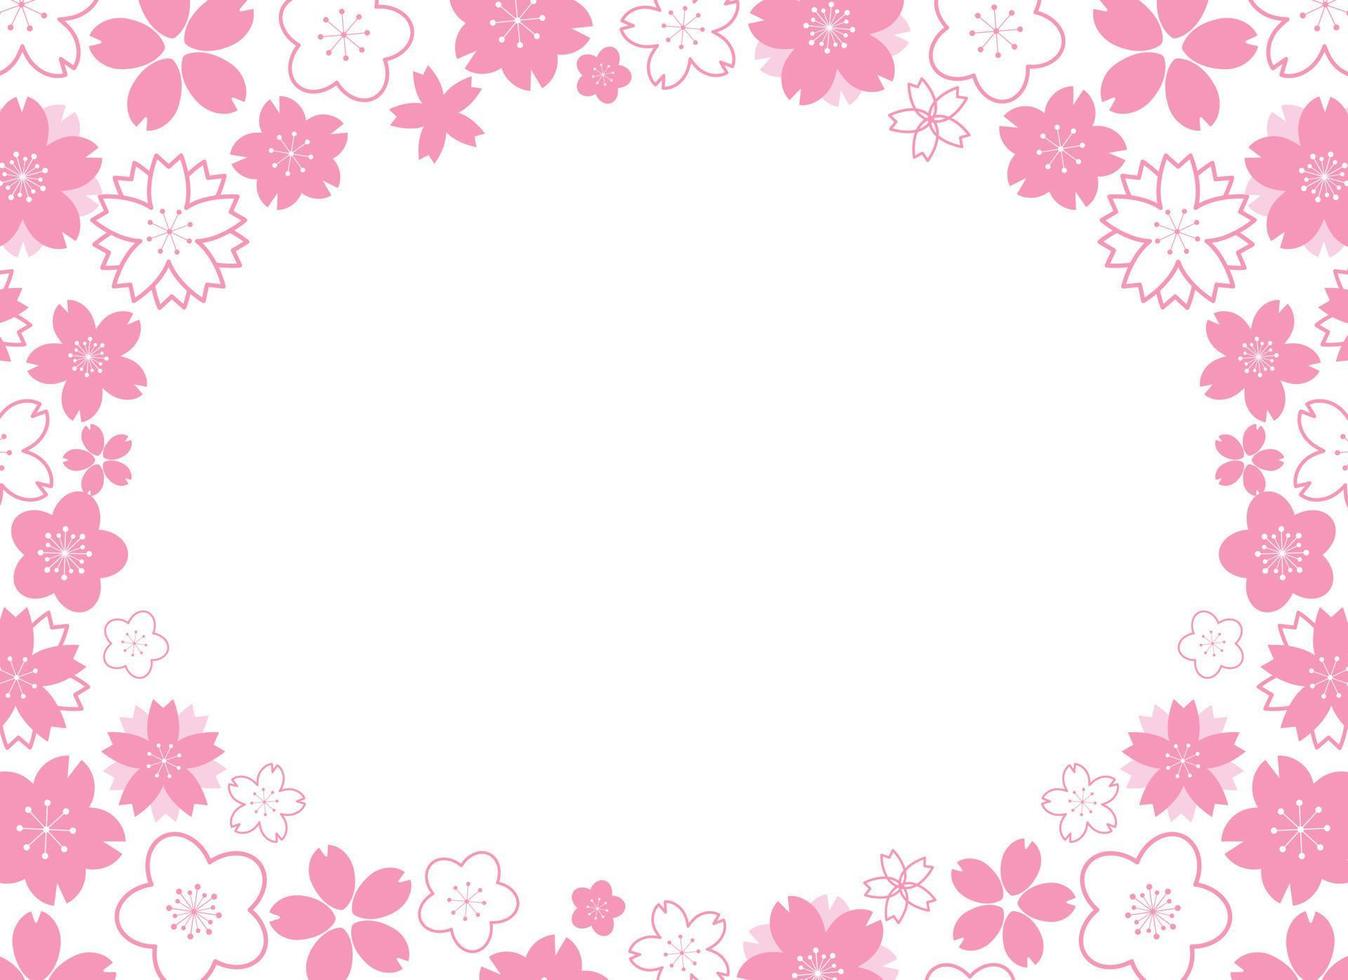 Horizontal frame with flat pink geometrical sakura flowers on white background vector